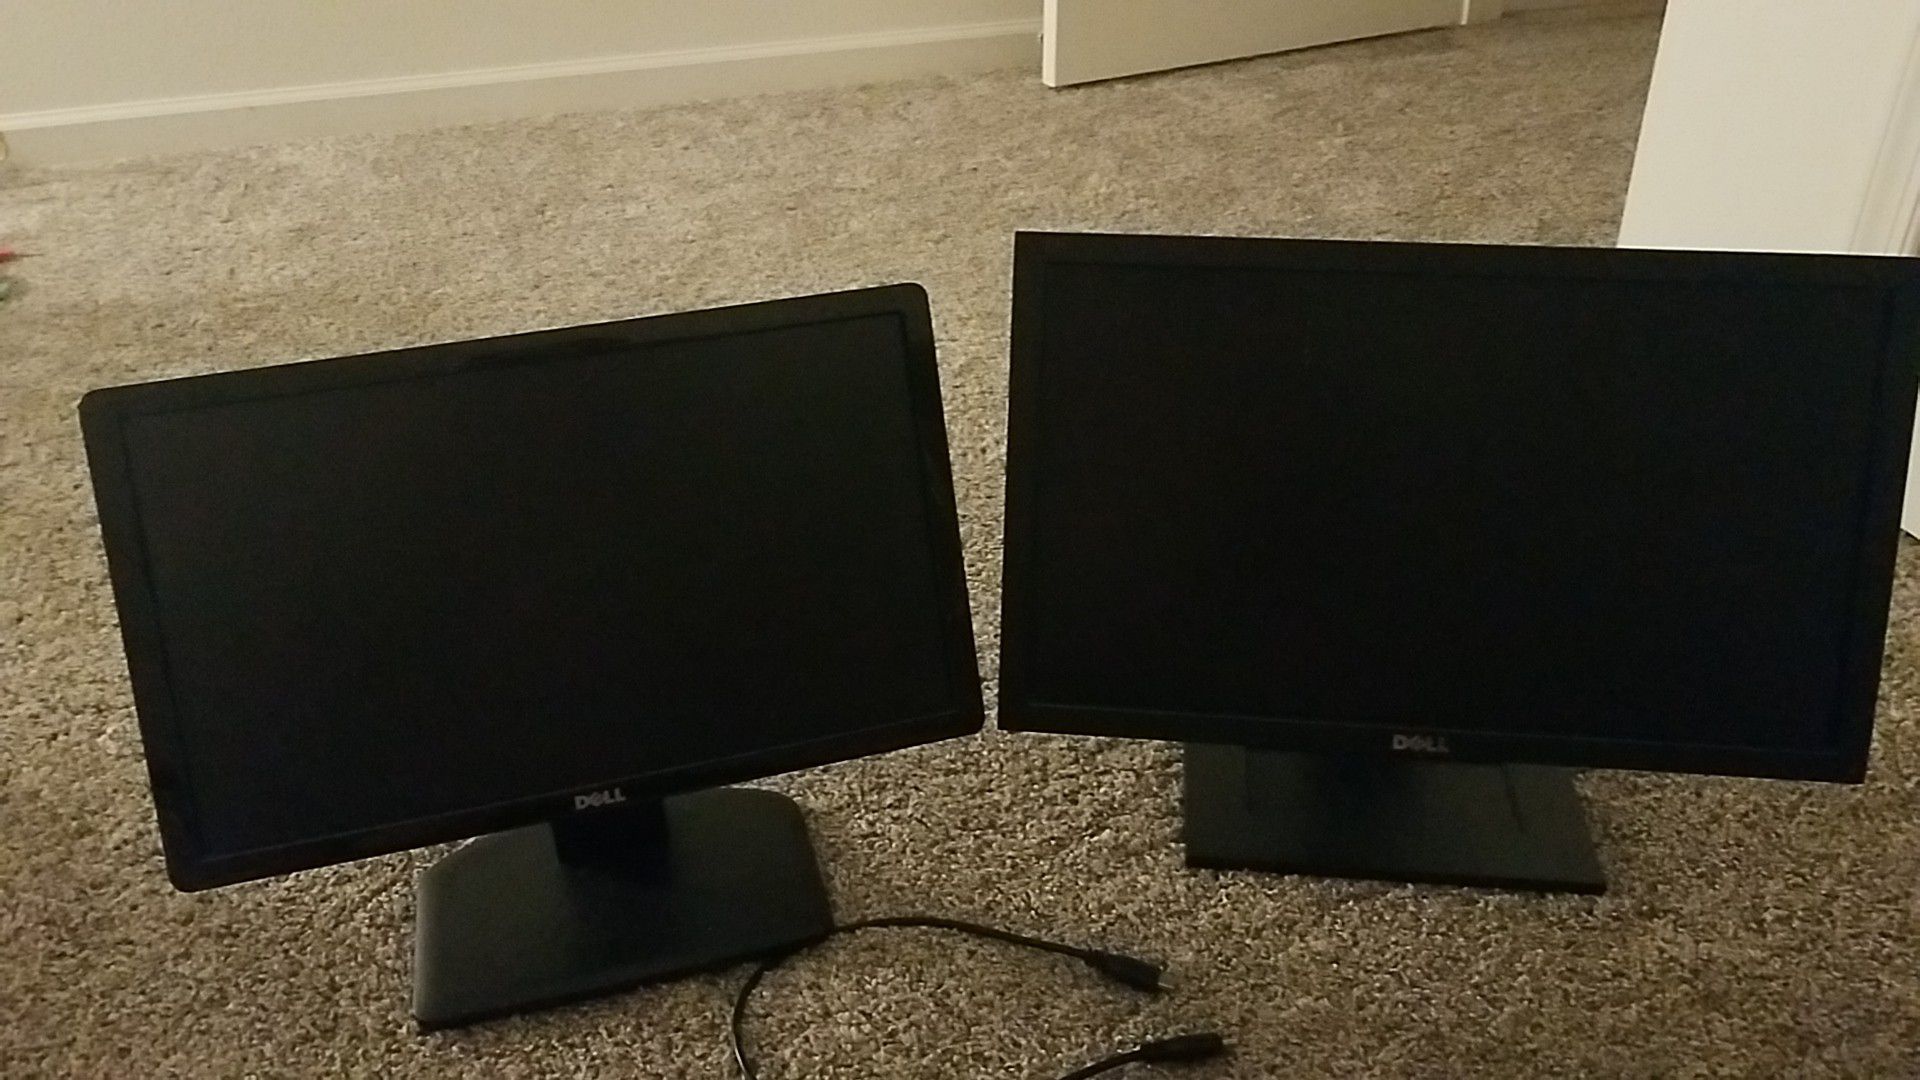 Two Flat screen Dell Computer monitors 15"